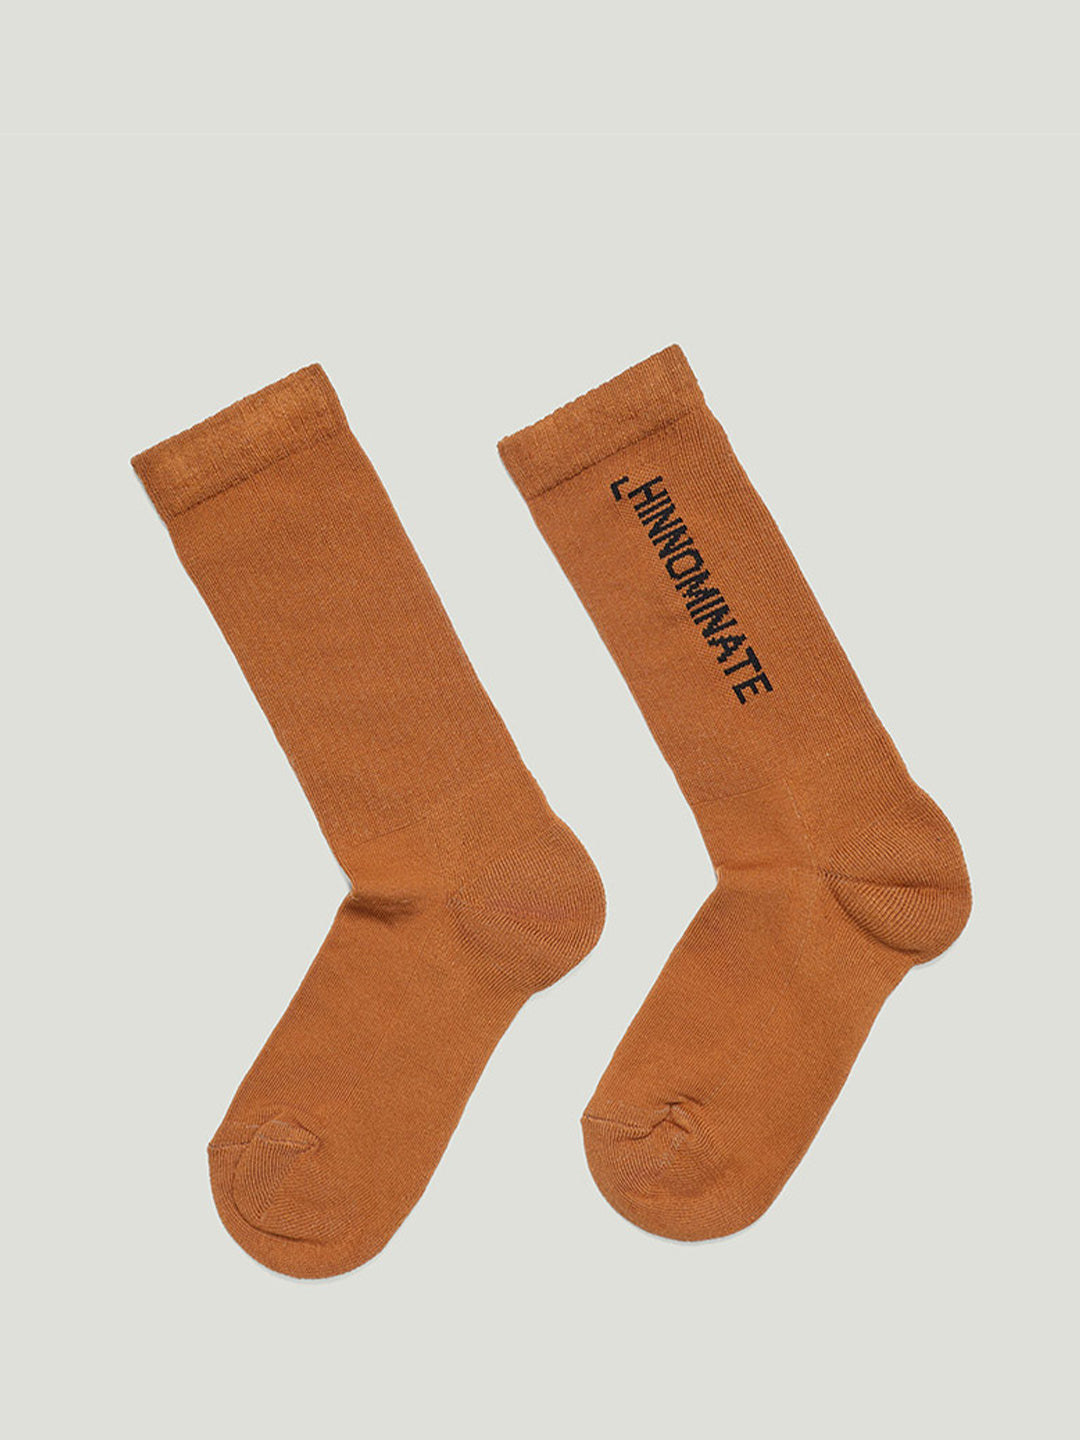 Hinnominate brown socks with print